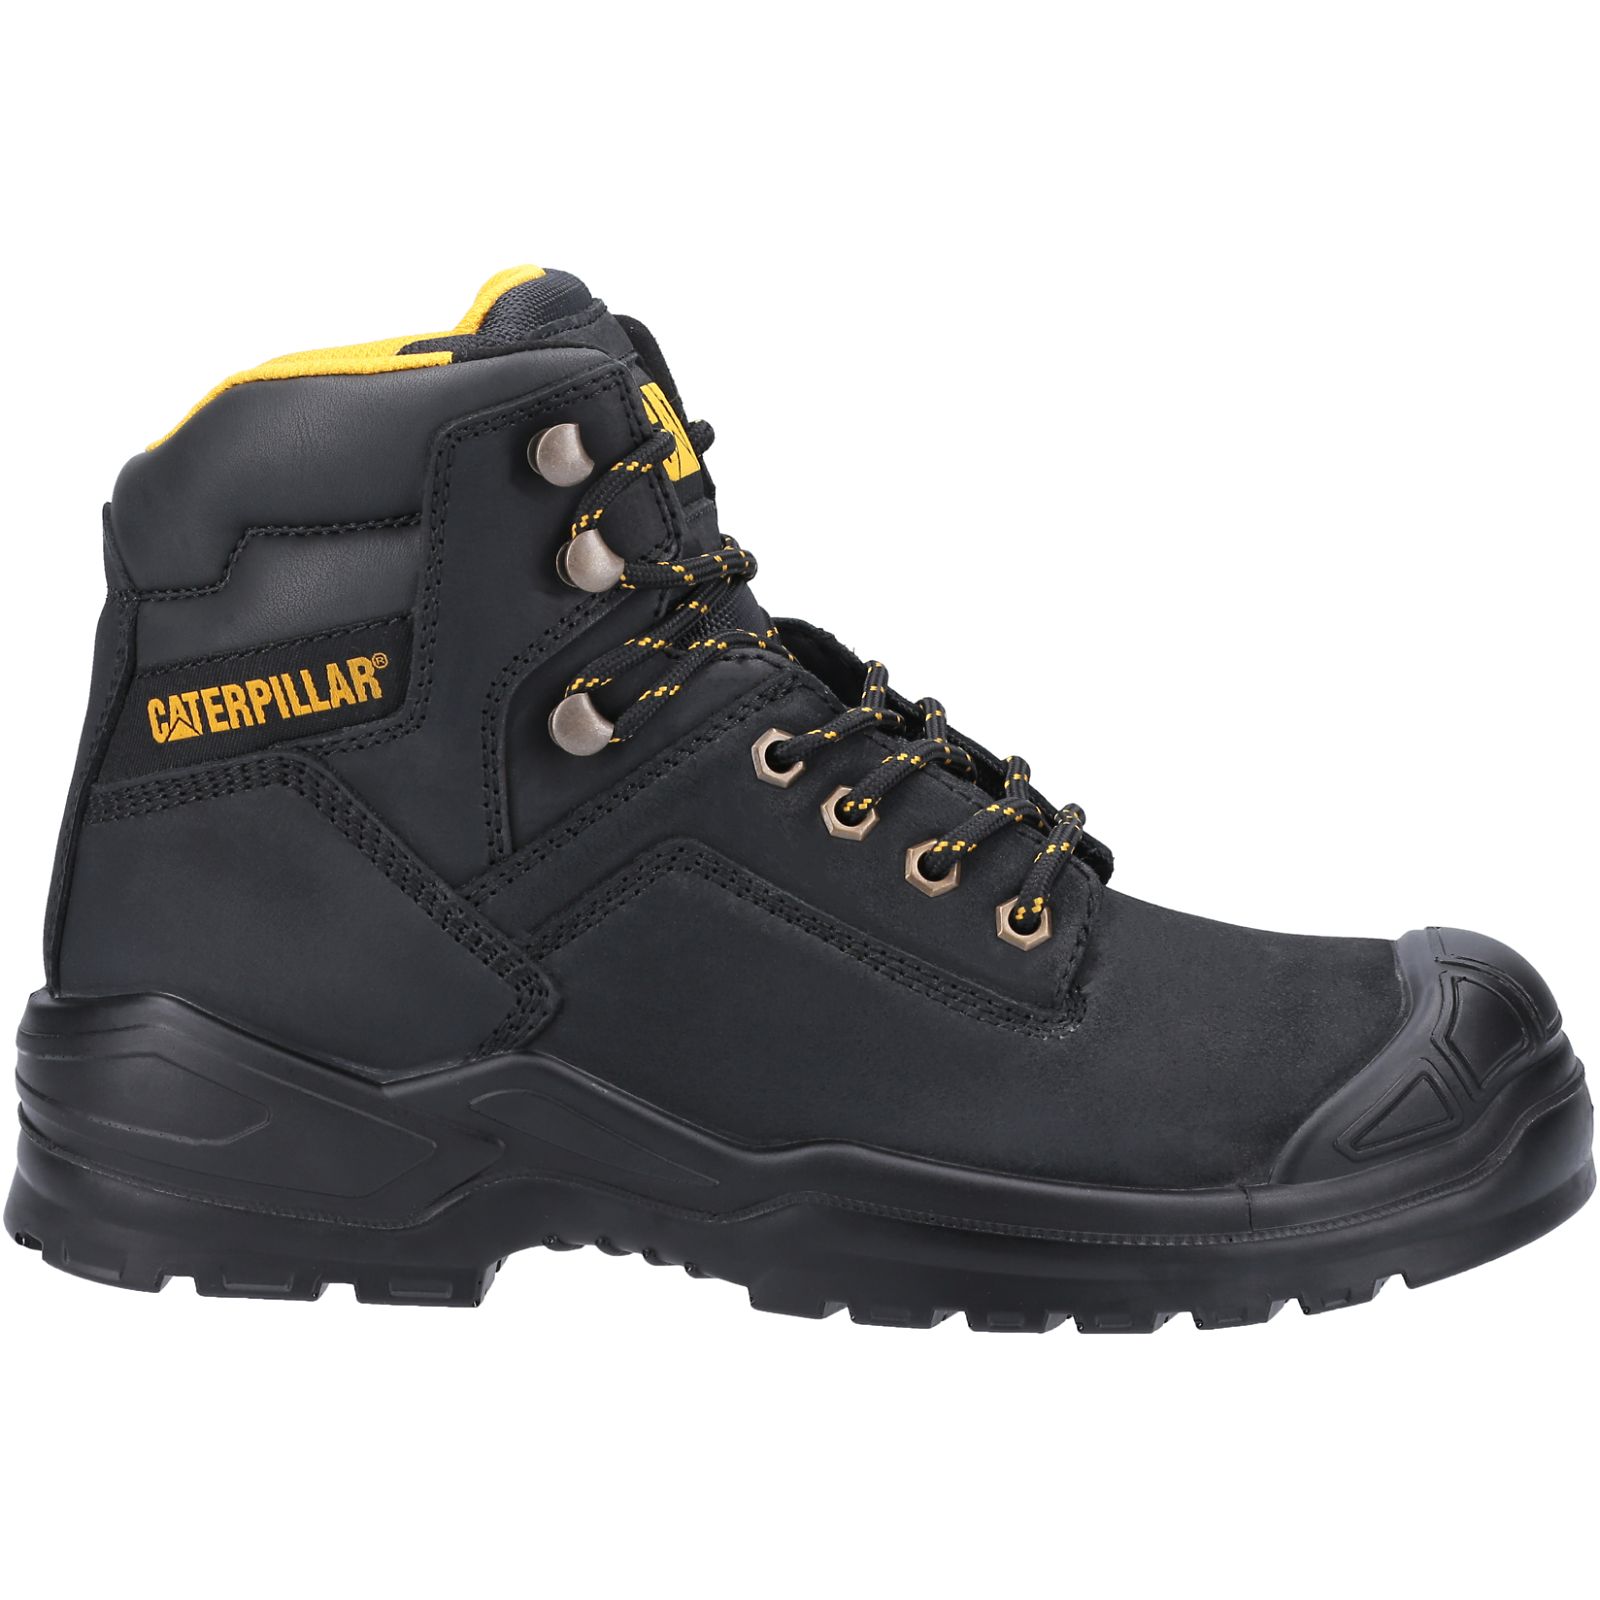 Caterpillar Work Boots Dubai - Caterpillar Striver Bump Steel Toe S3 Src Mens - Black NIDGZE597